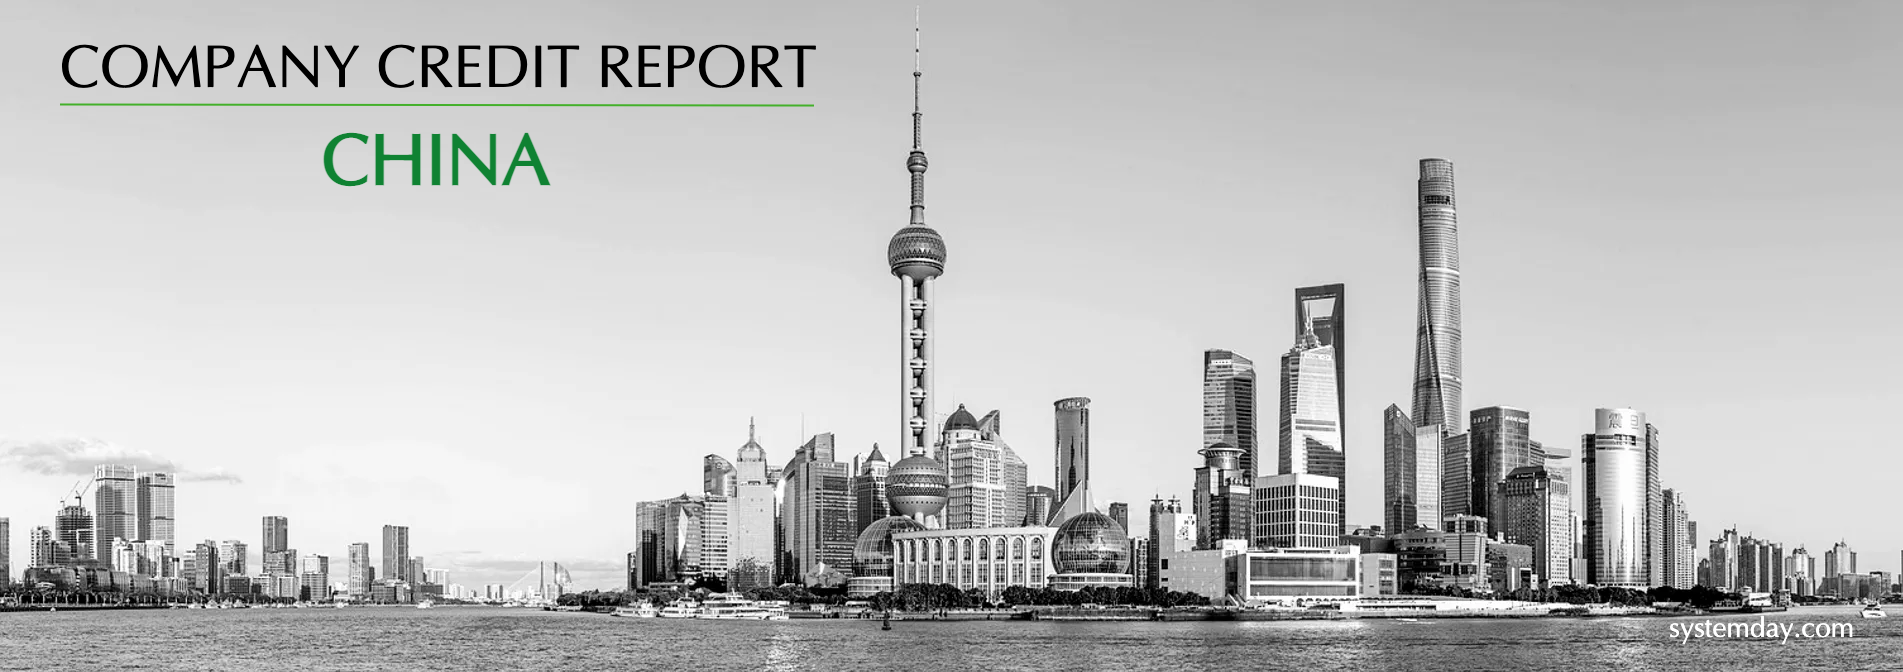 China Company Credit Report